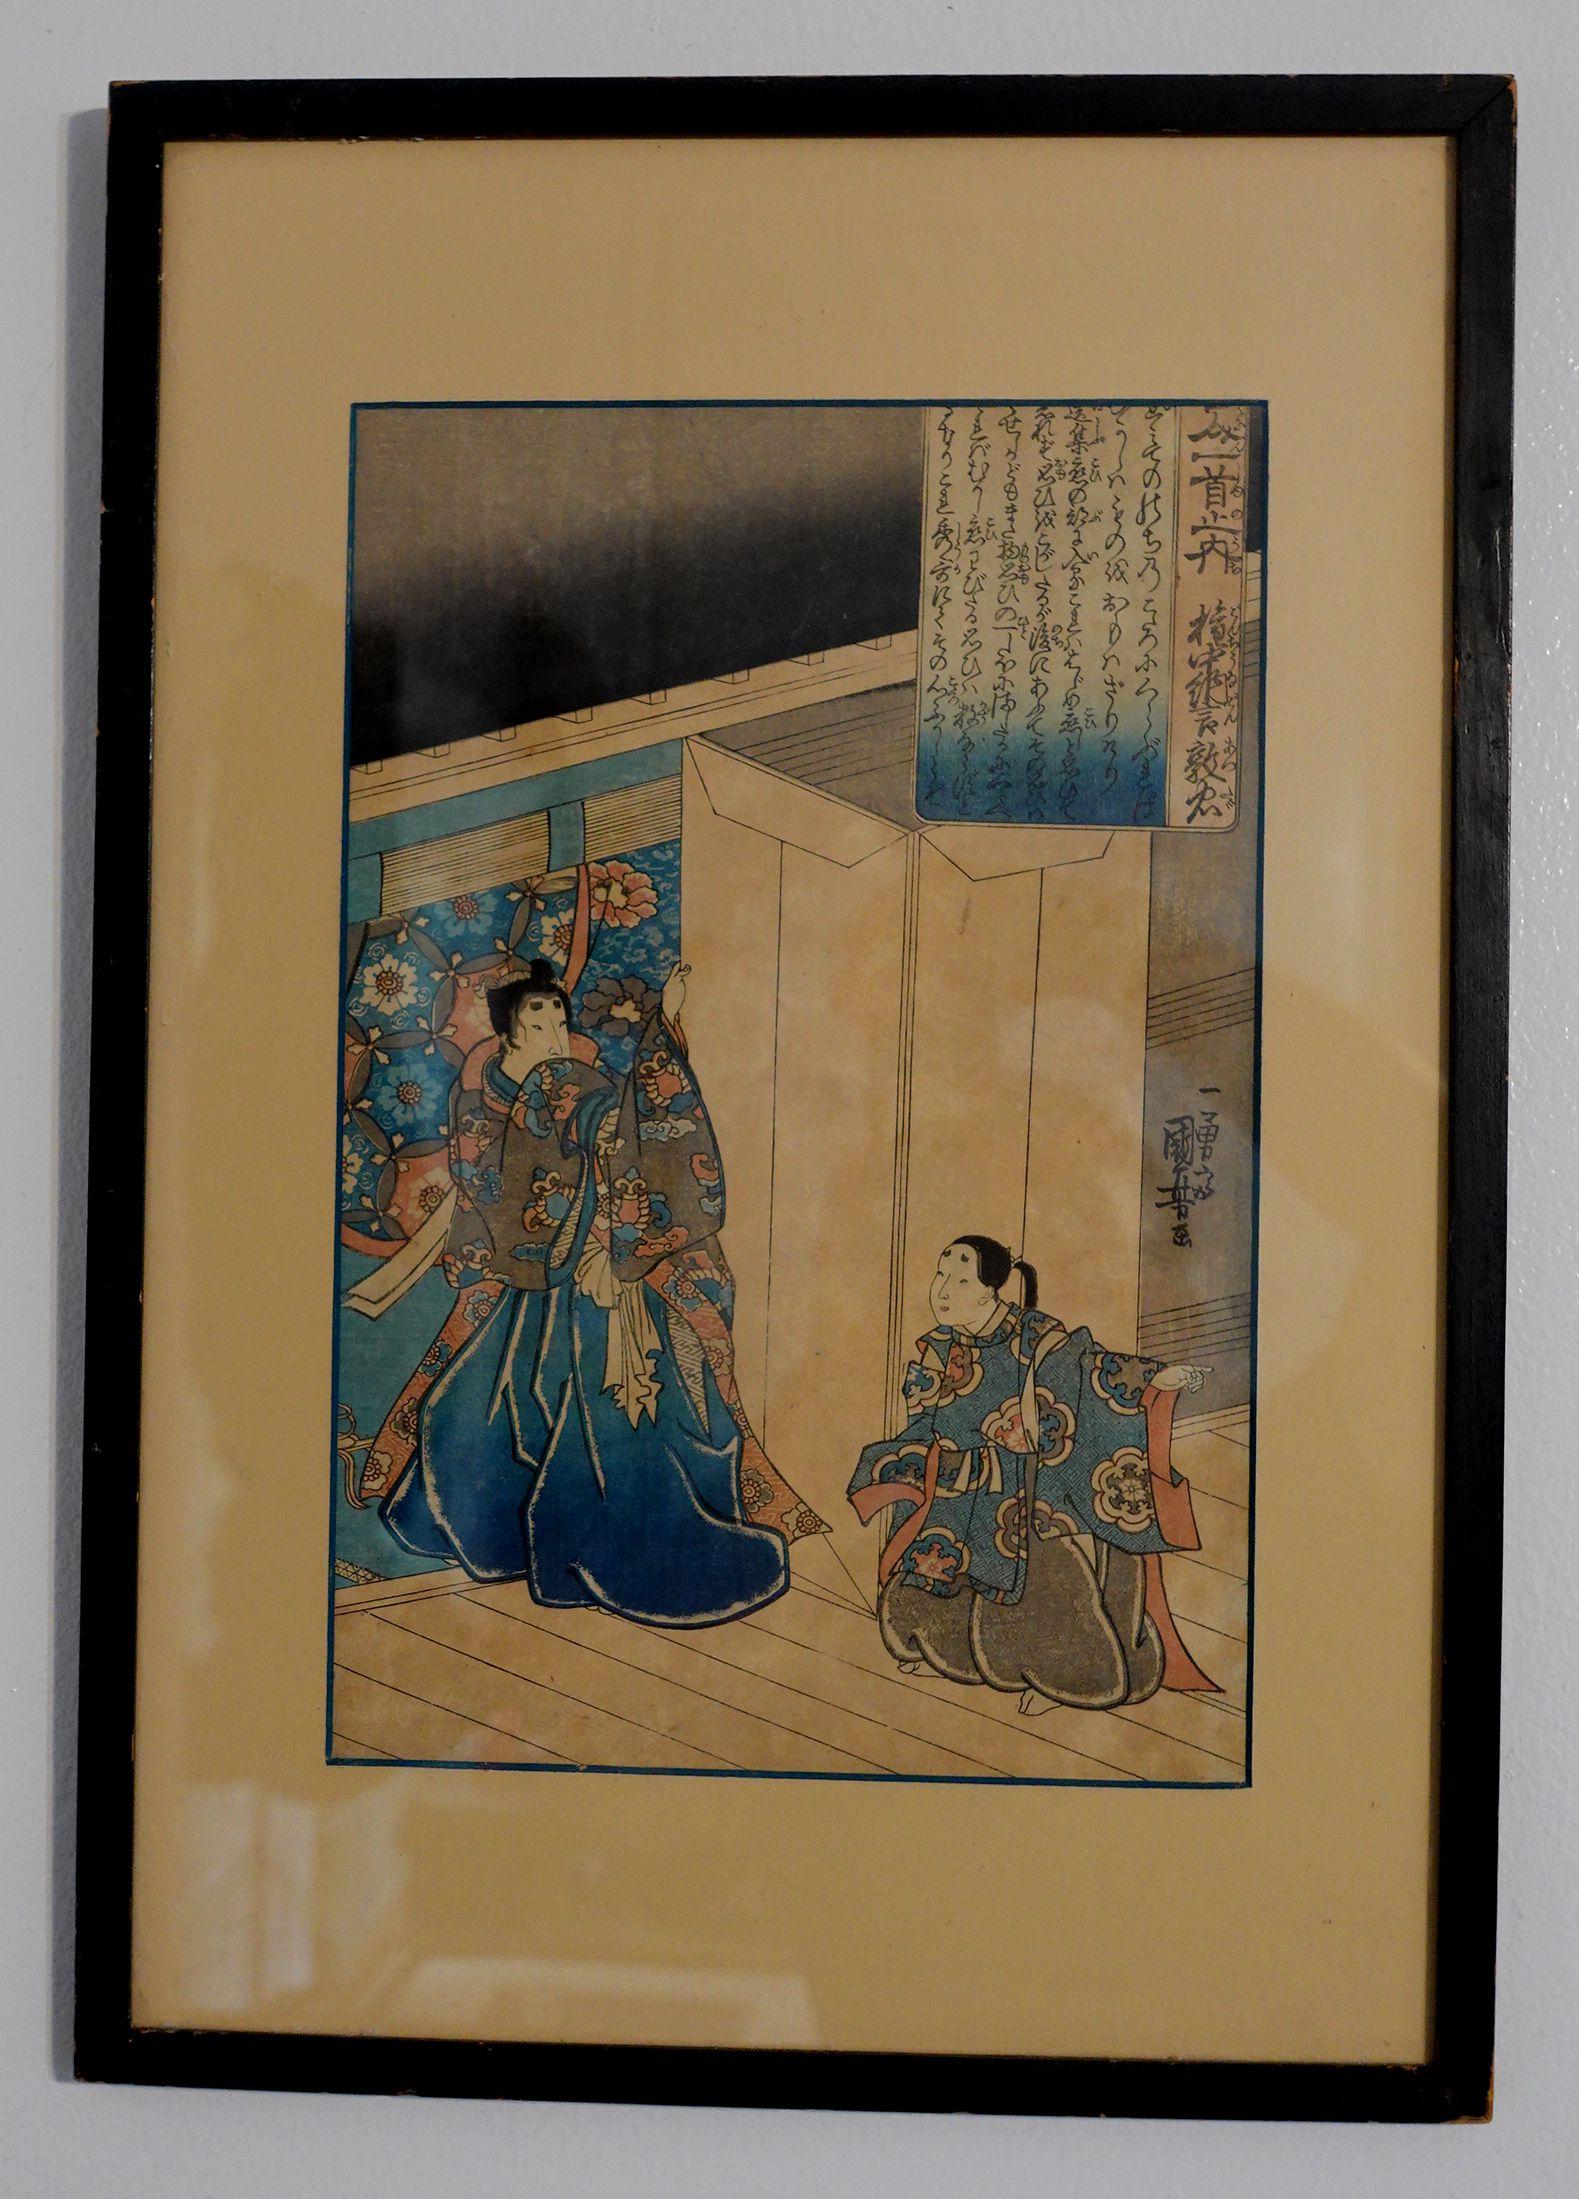 Antique Japanese Woodblock Print by Utagawa Kuniyoshi (1797-1861), 一勇齋國芳

Dimensions: with frame: 12.75